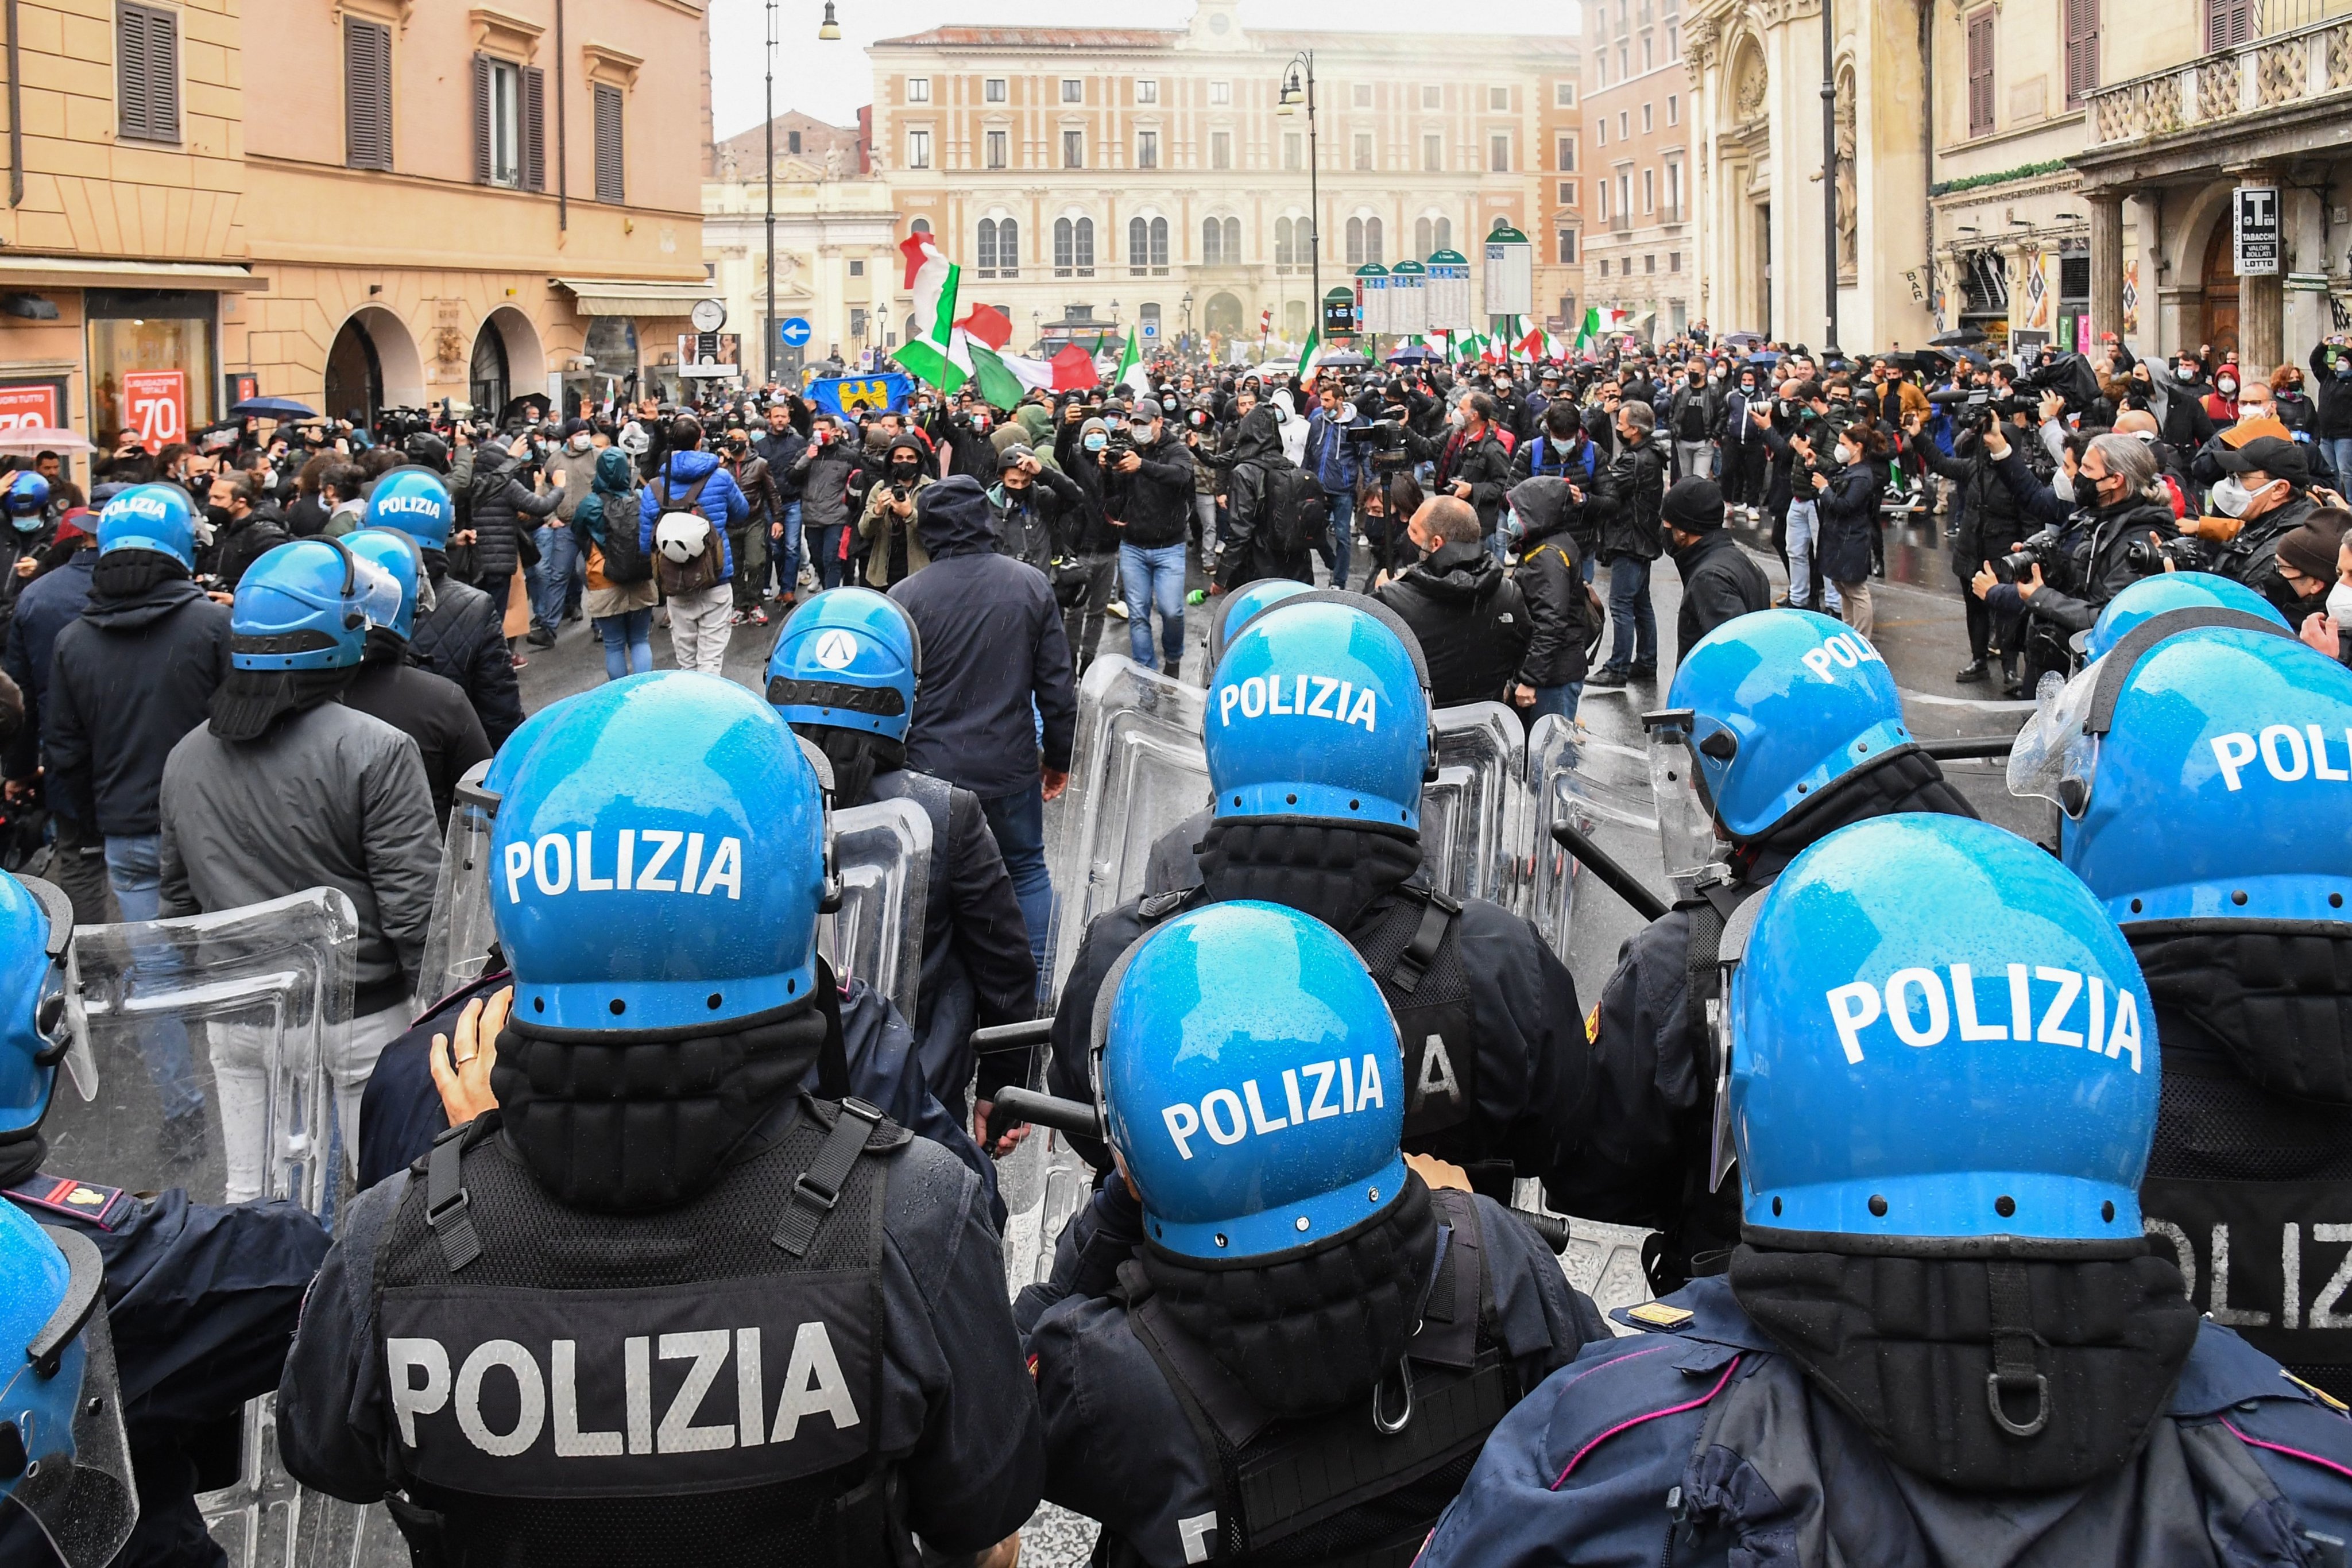 TOPSHOT-ITALY-HEALTH-VIRUS-ECONOMY-PROTEST